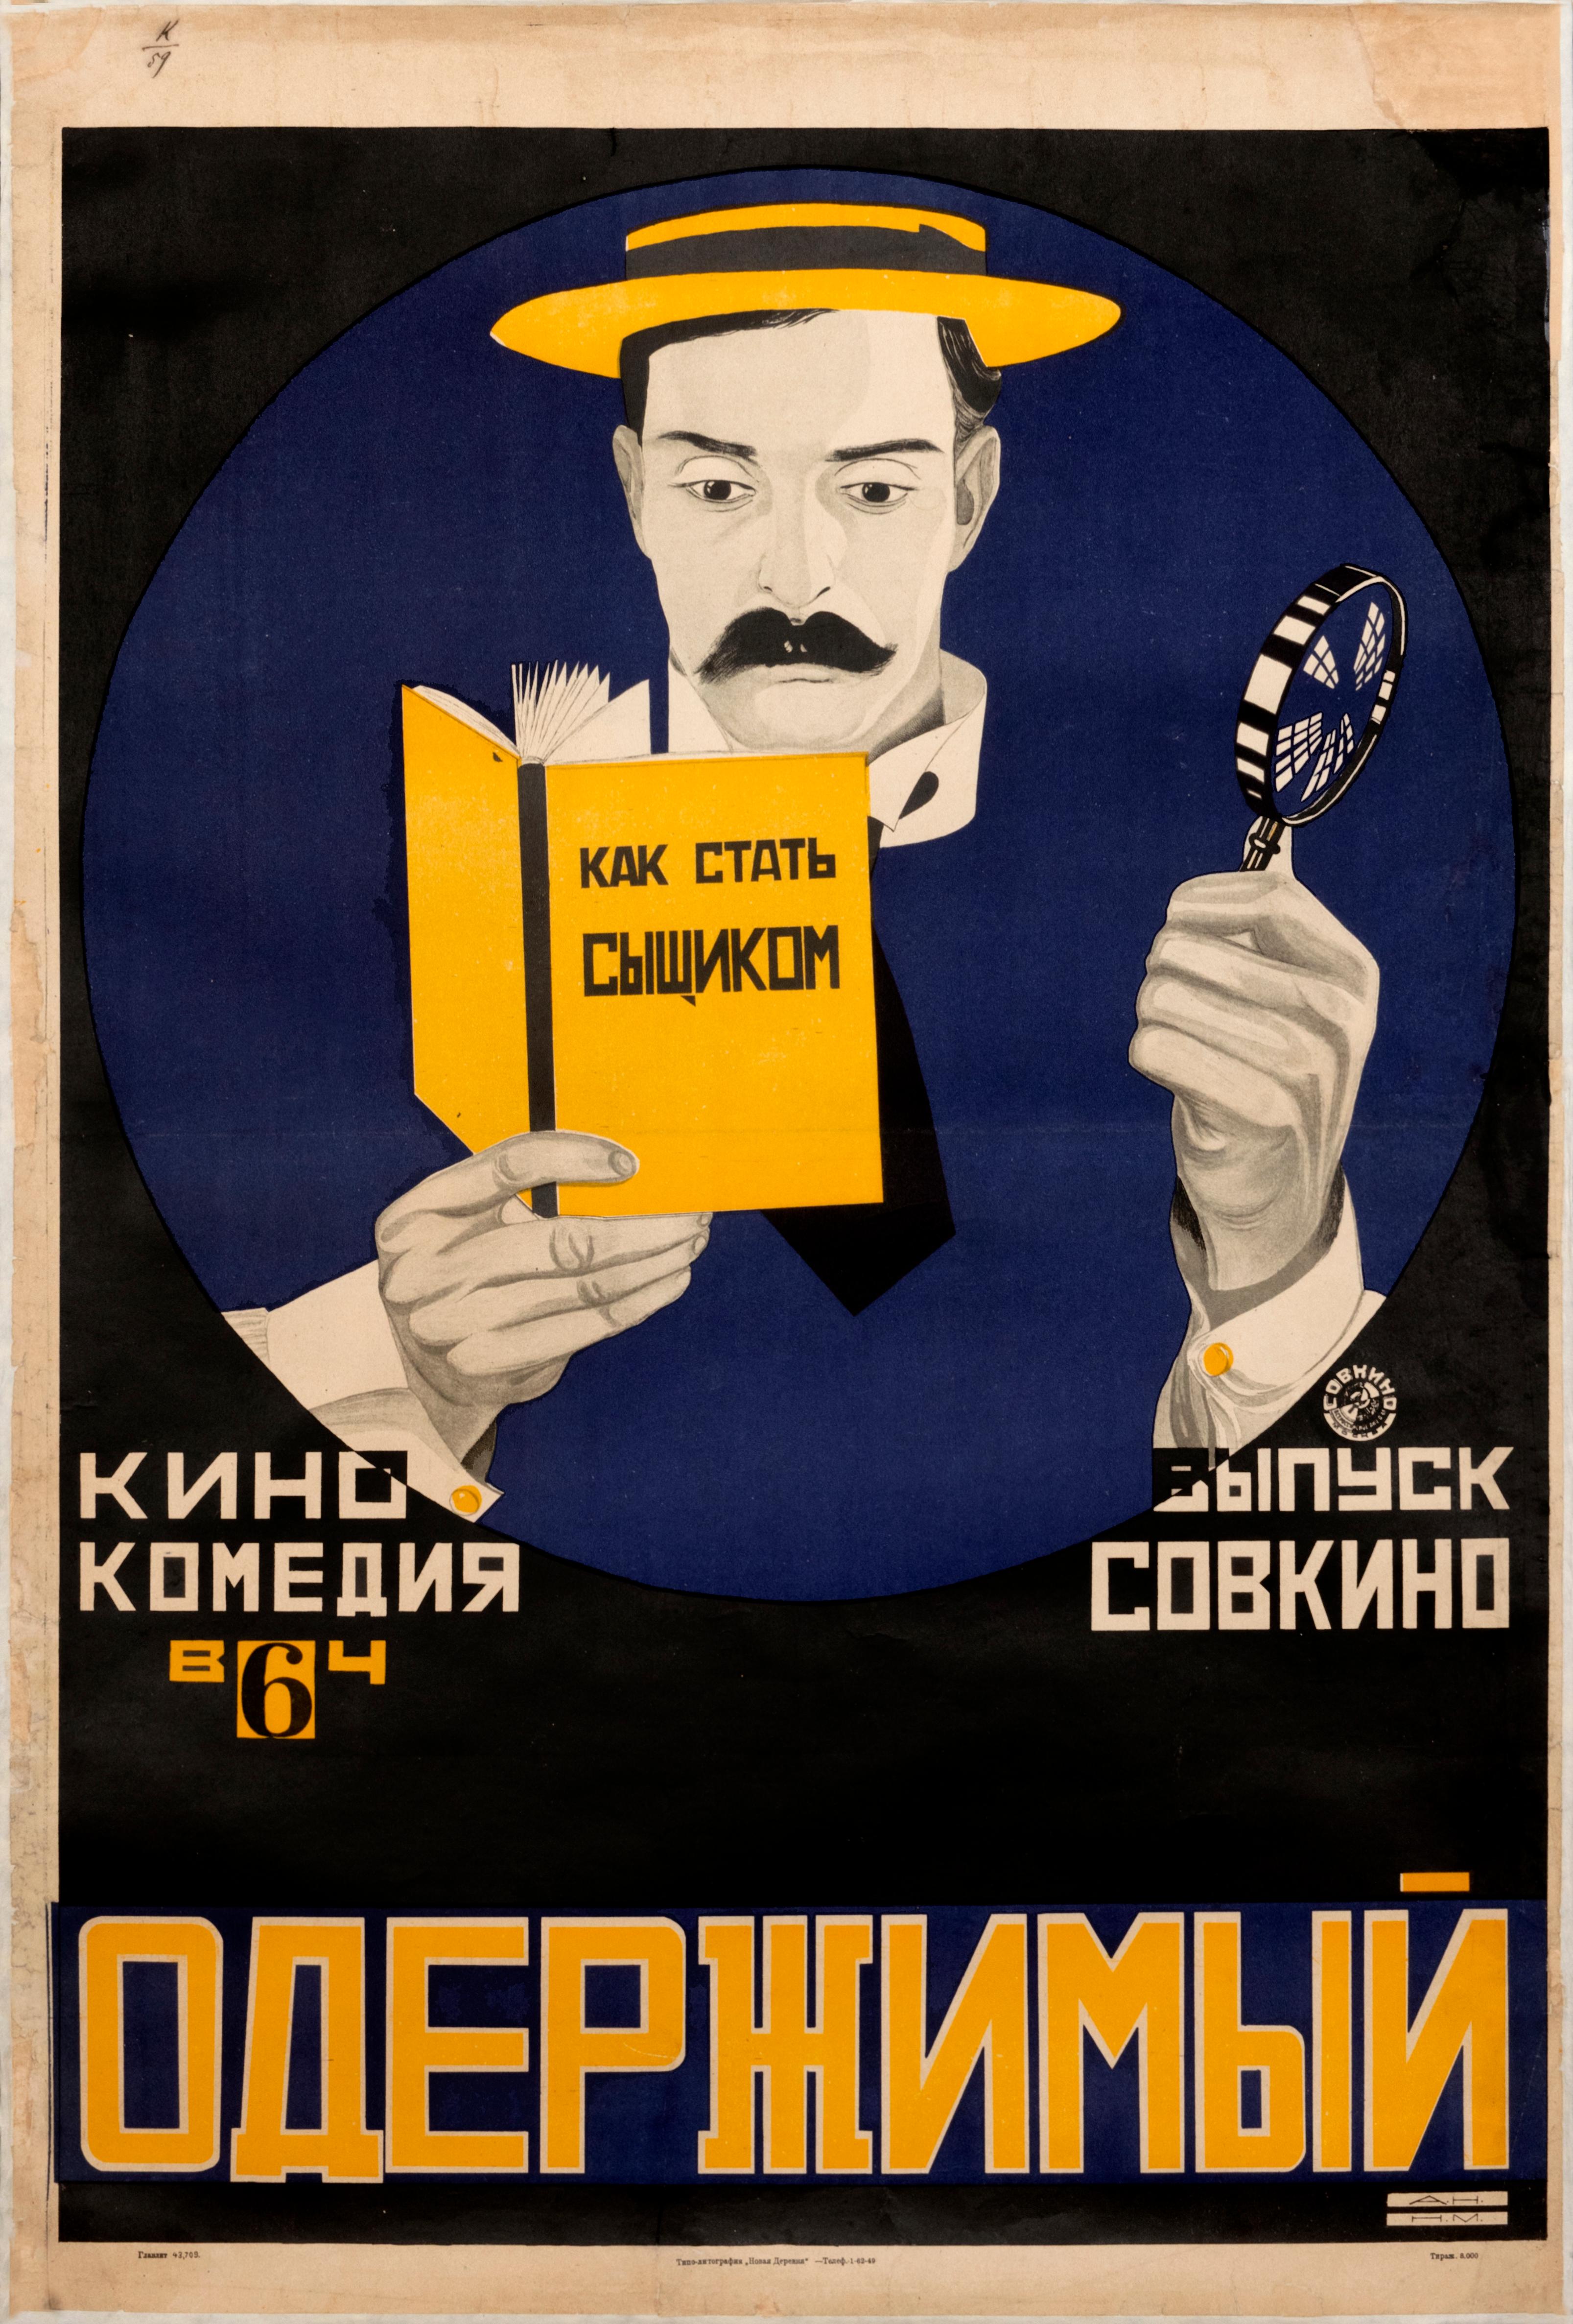 "Possessed starring Buster Keaton (Sherlock Jr.)" Russian Silent Film Poster  - Print by Alexander Naumov